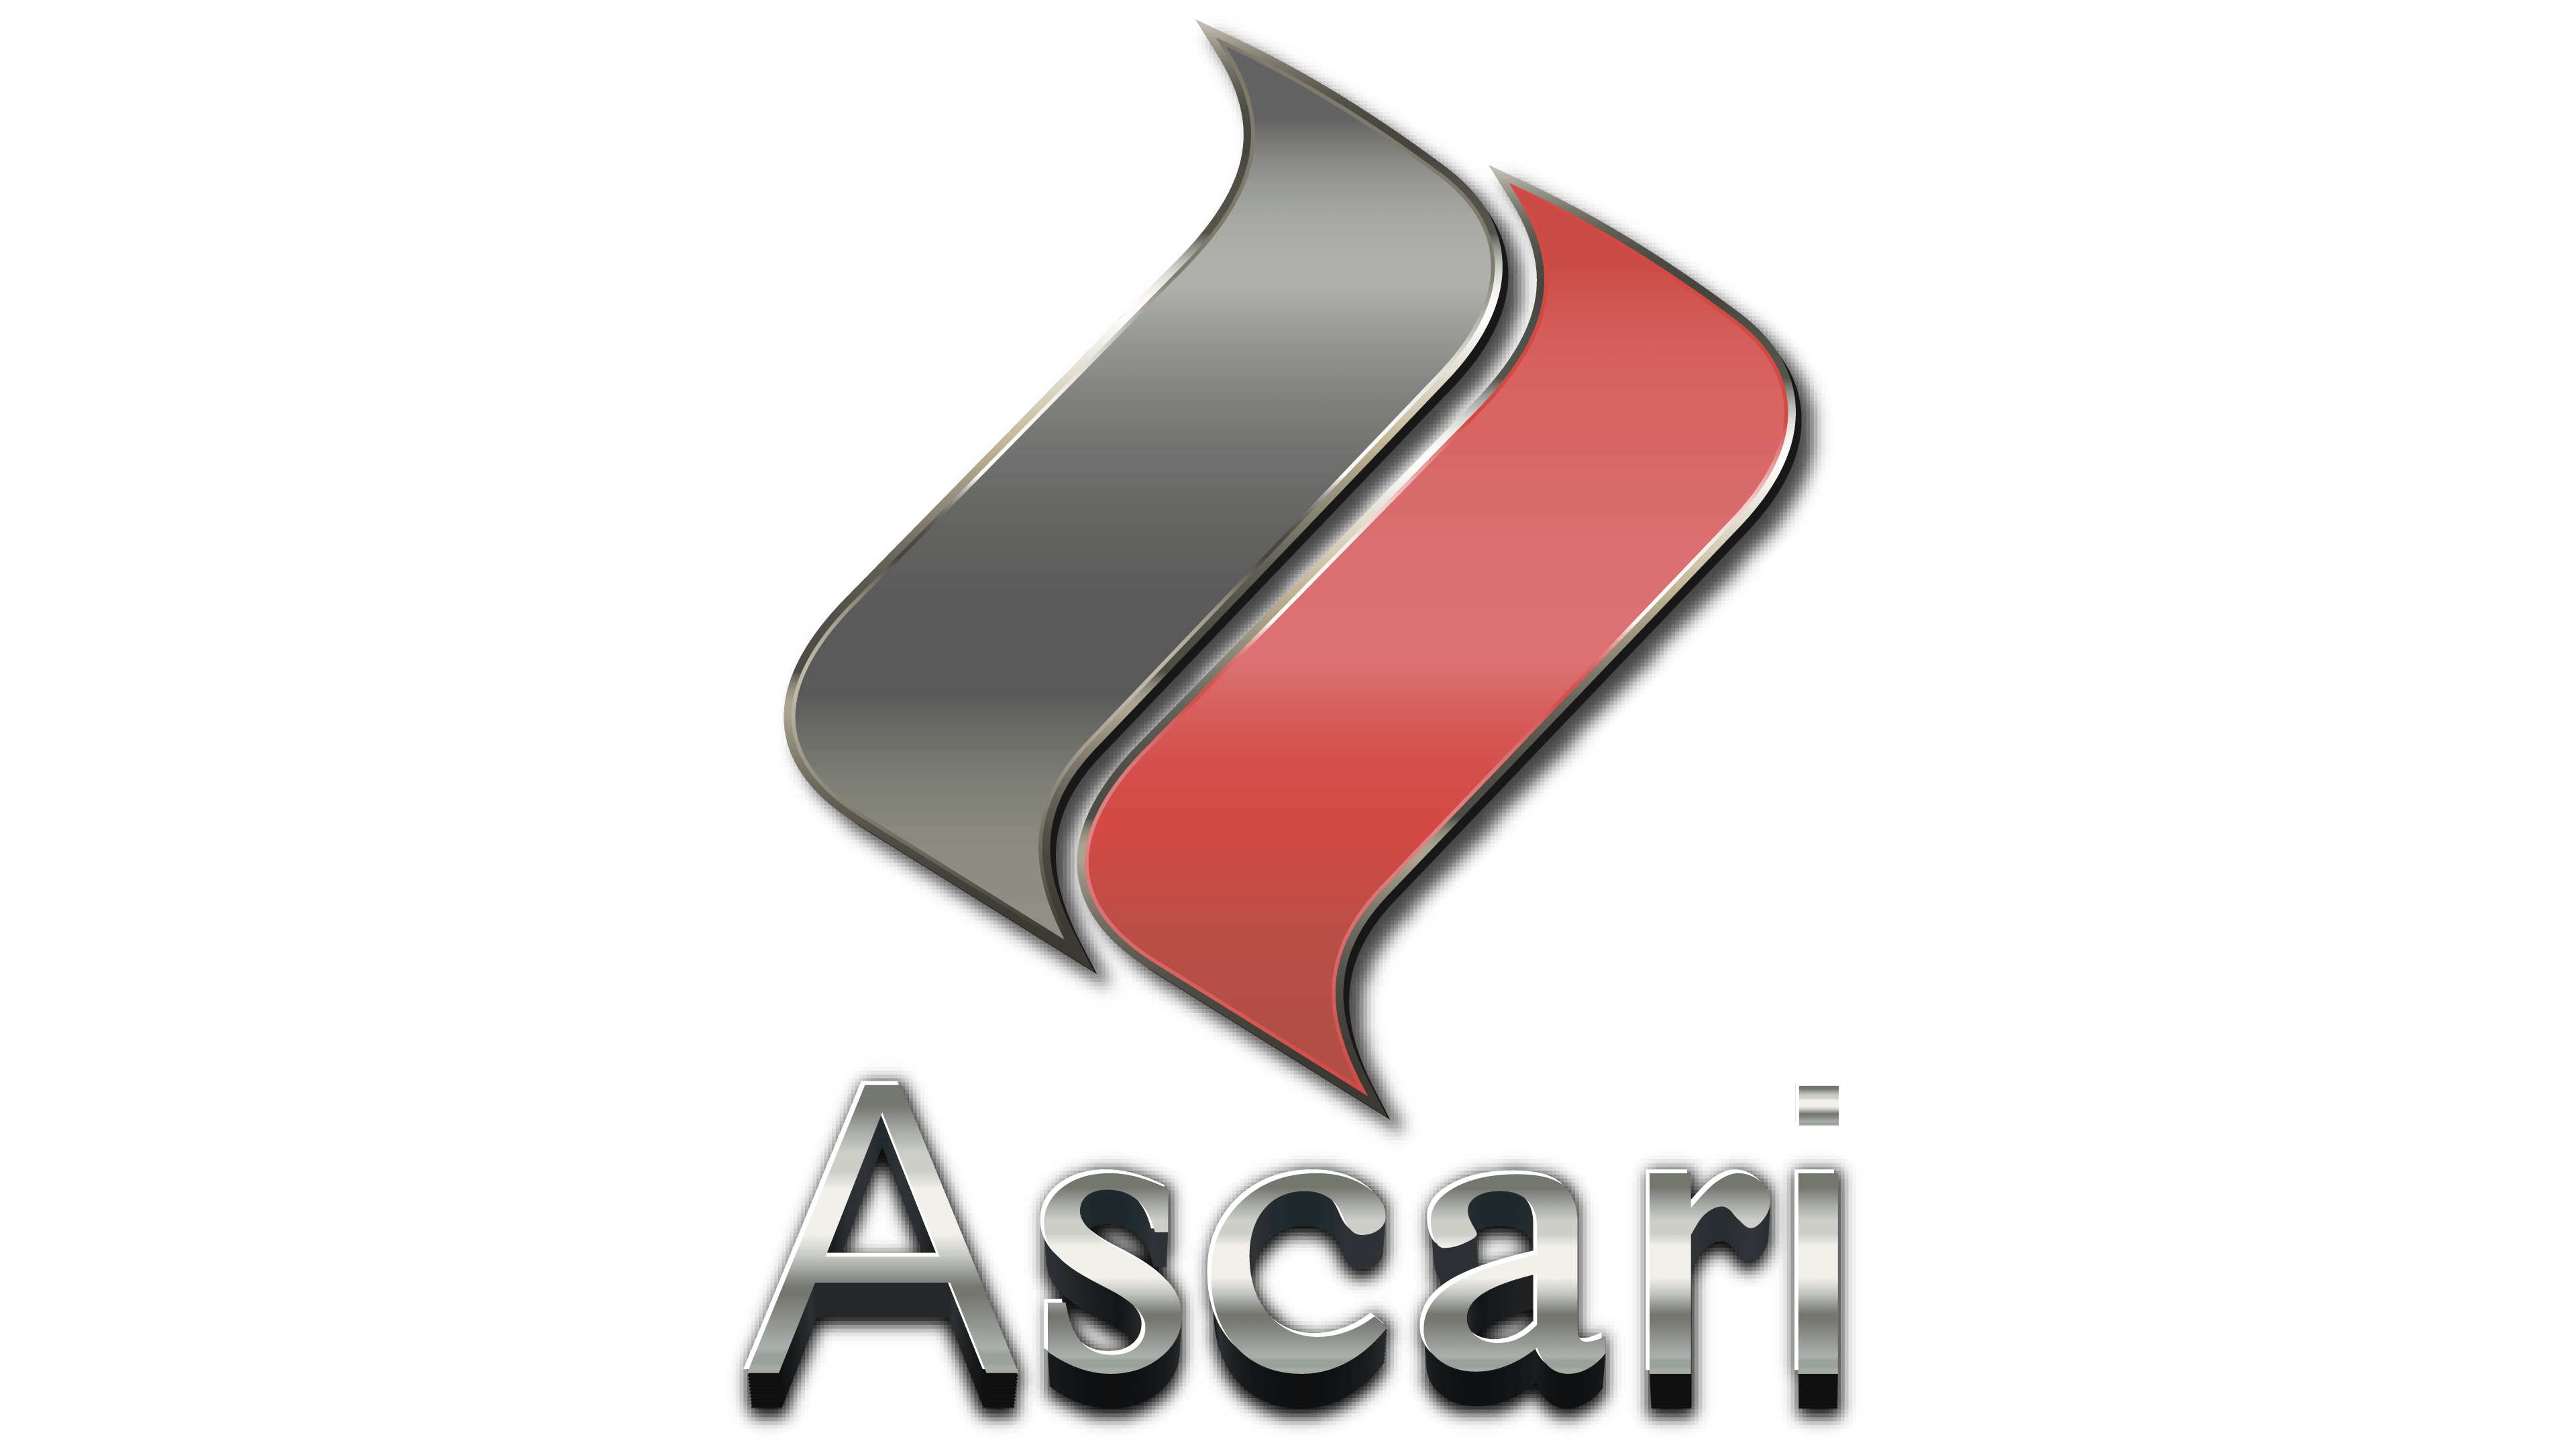 Ascari Logo - Ascari logo free online Puzzle Games on bobandsuewilliams